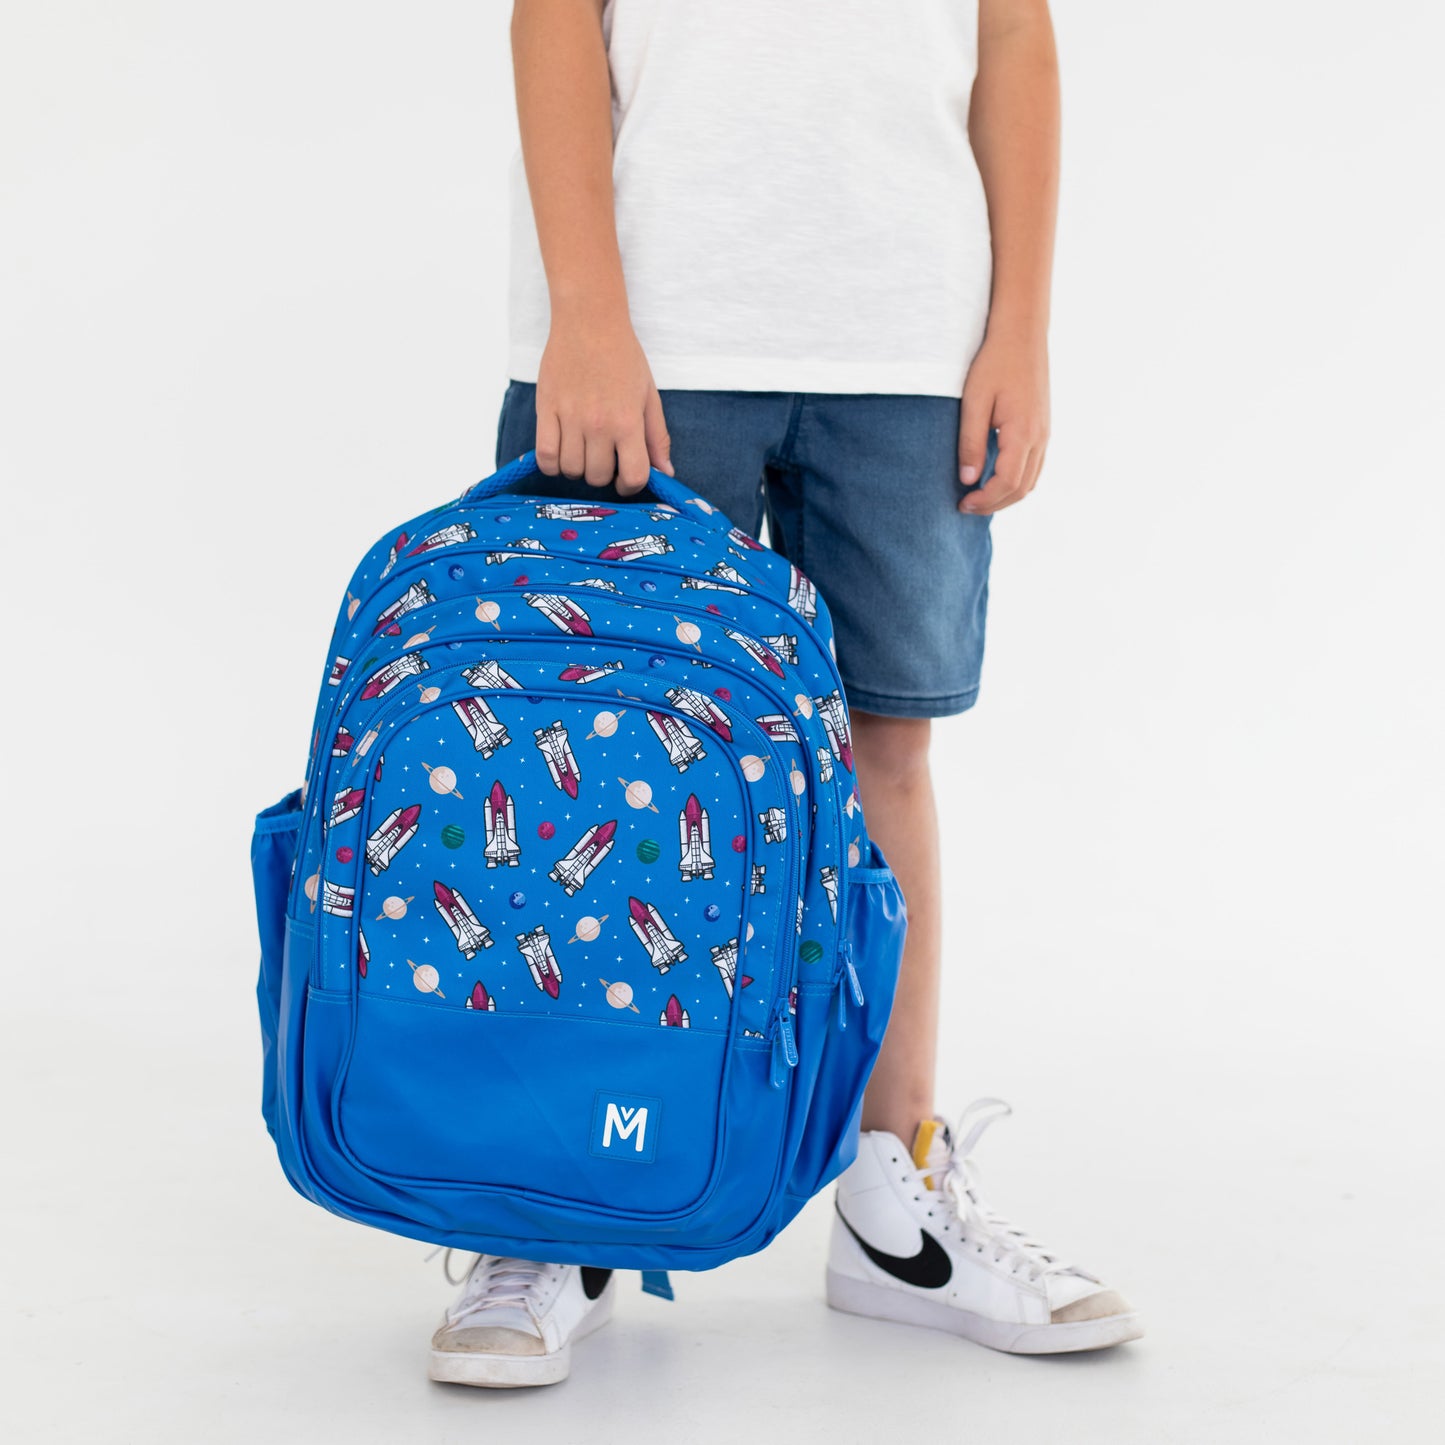 MontiiCo School Bag Package - Galactic